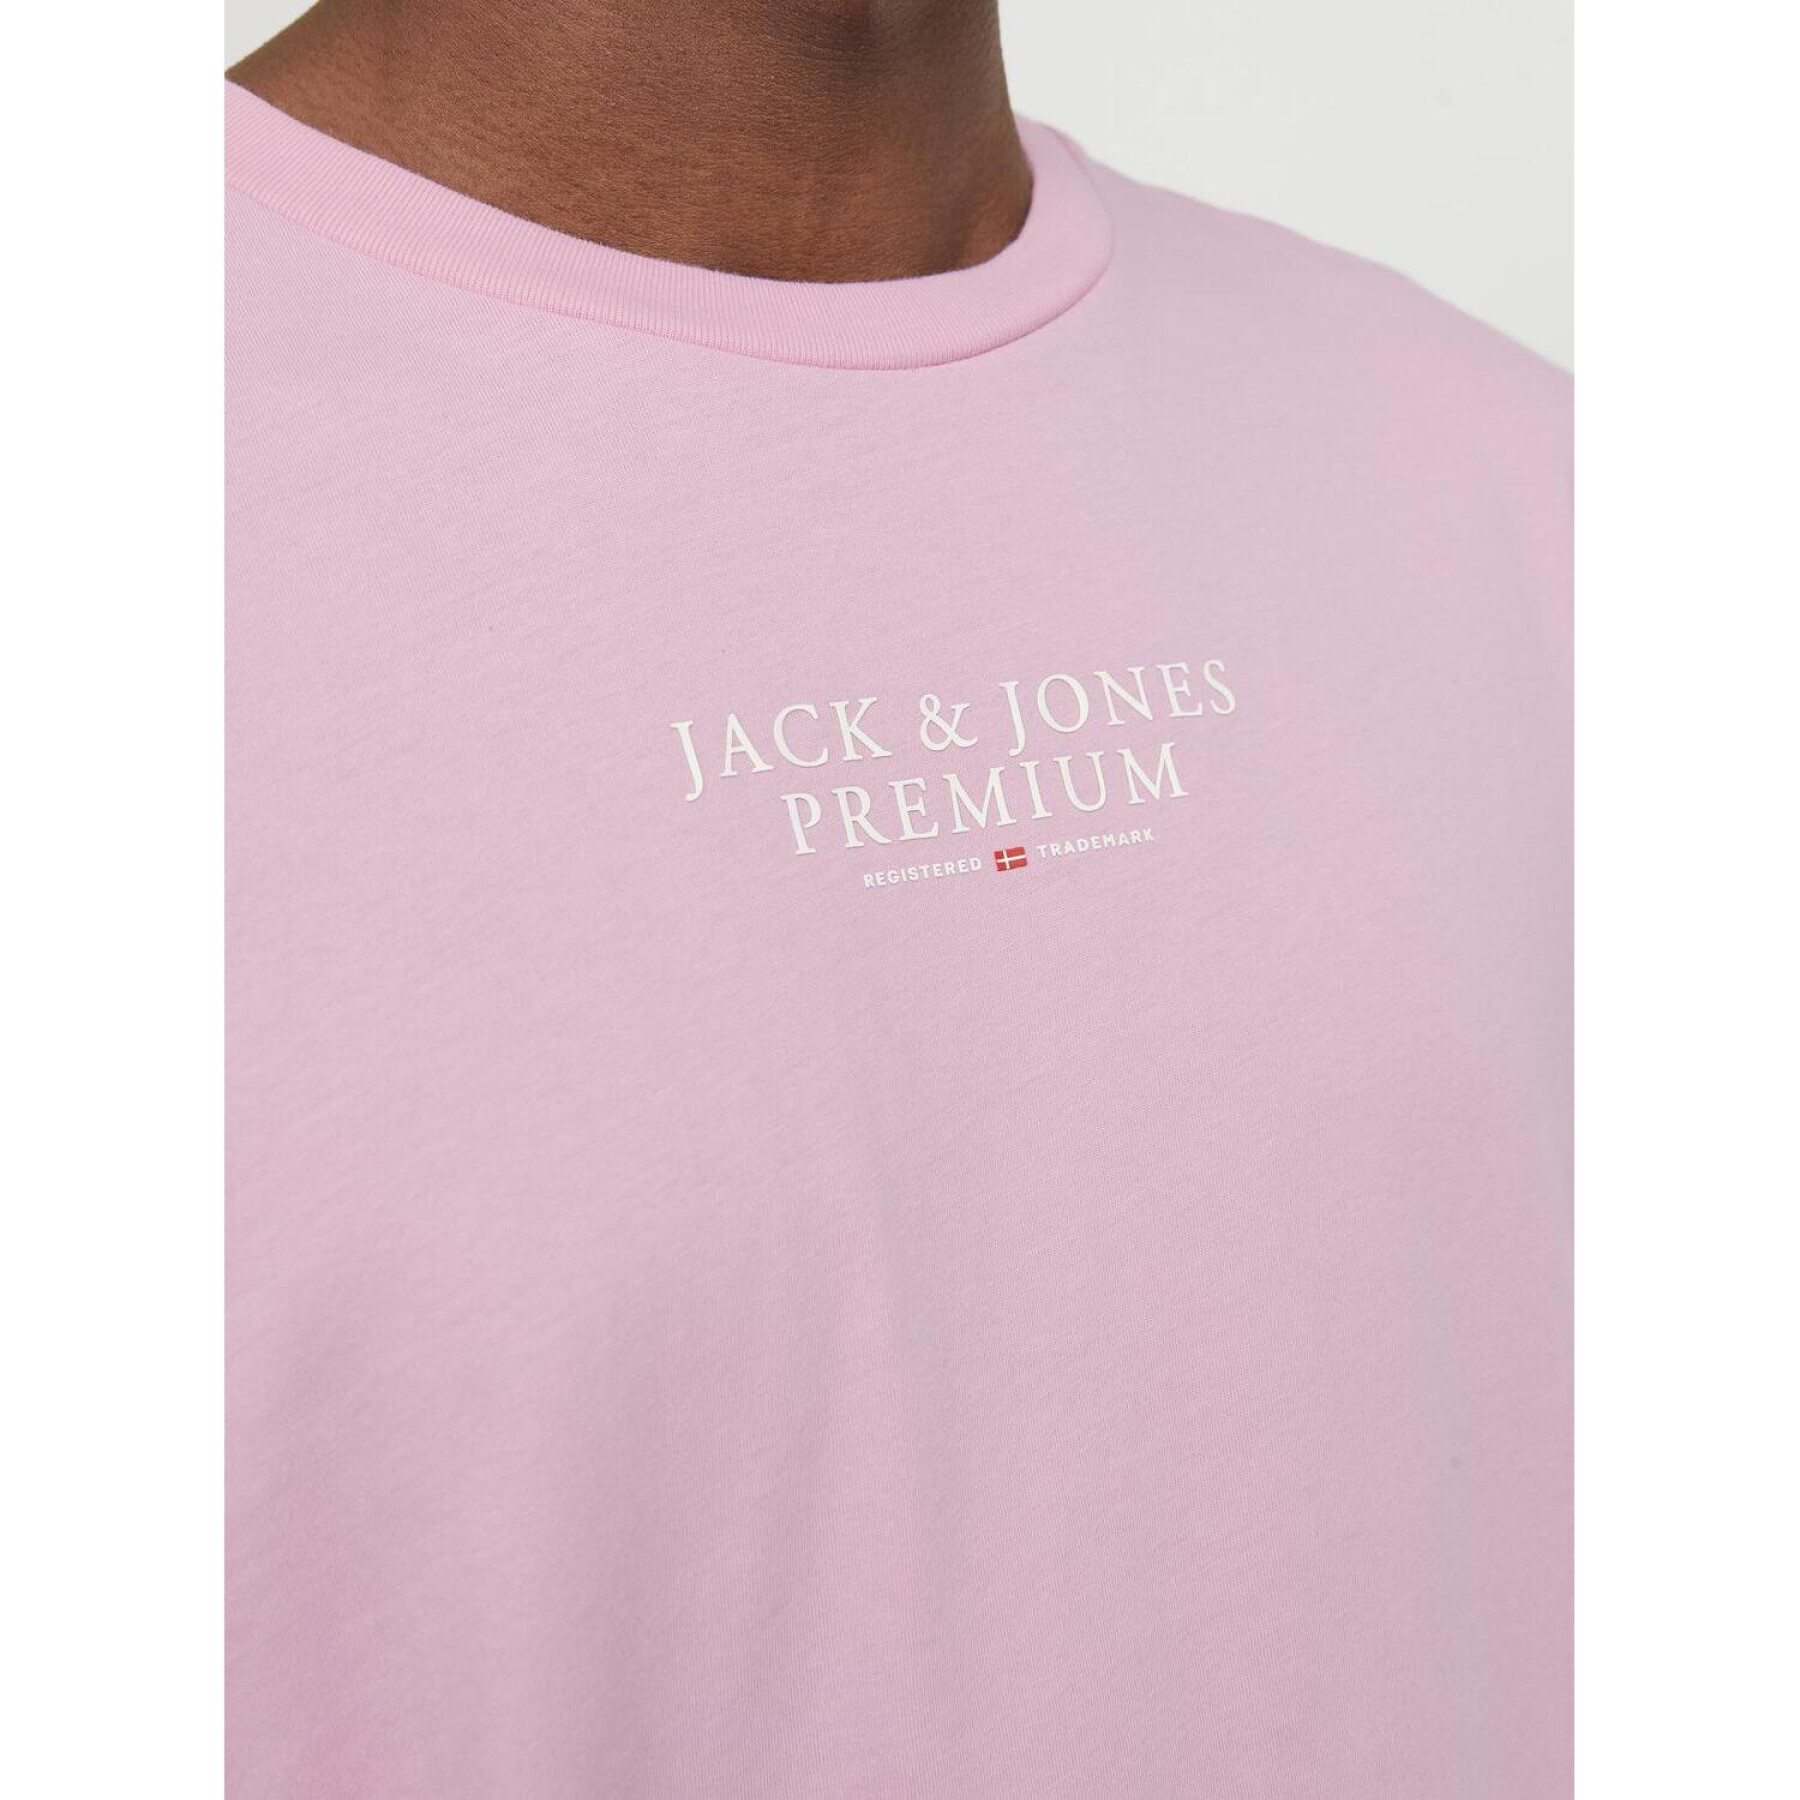 Camiseta Jack & Jones Archie